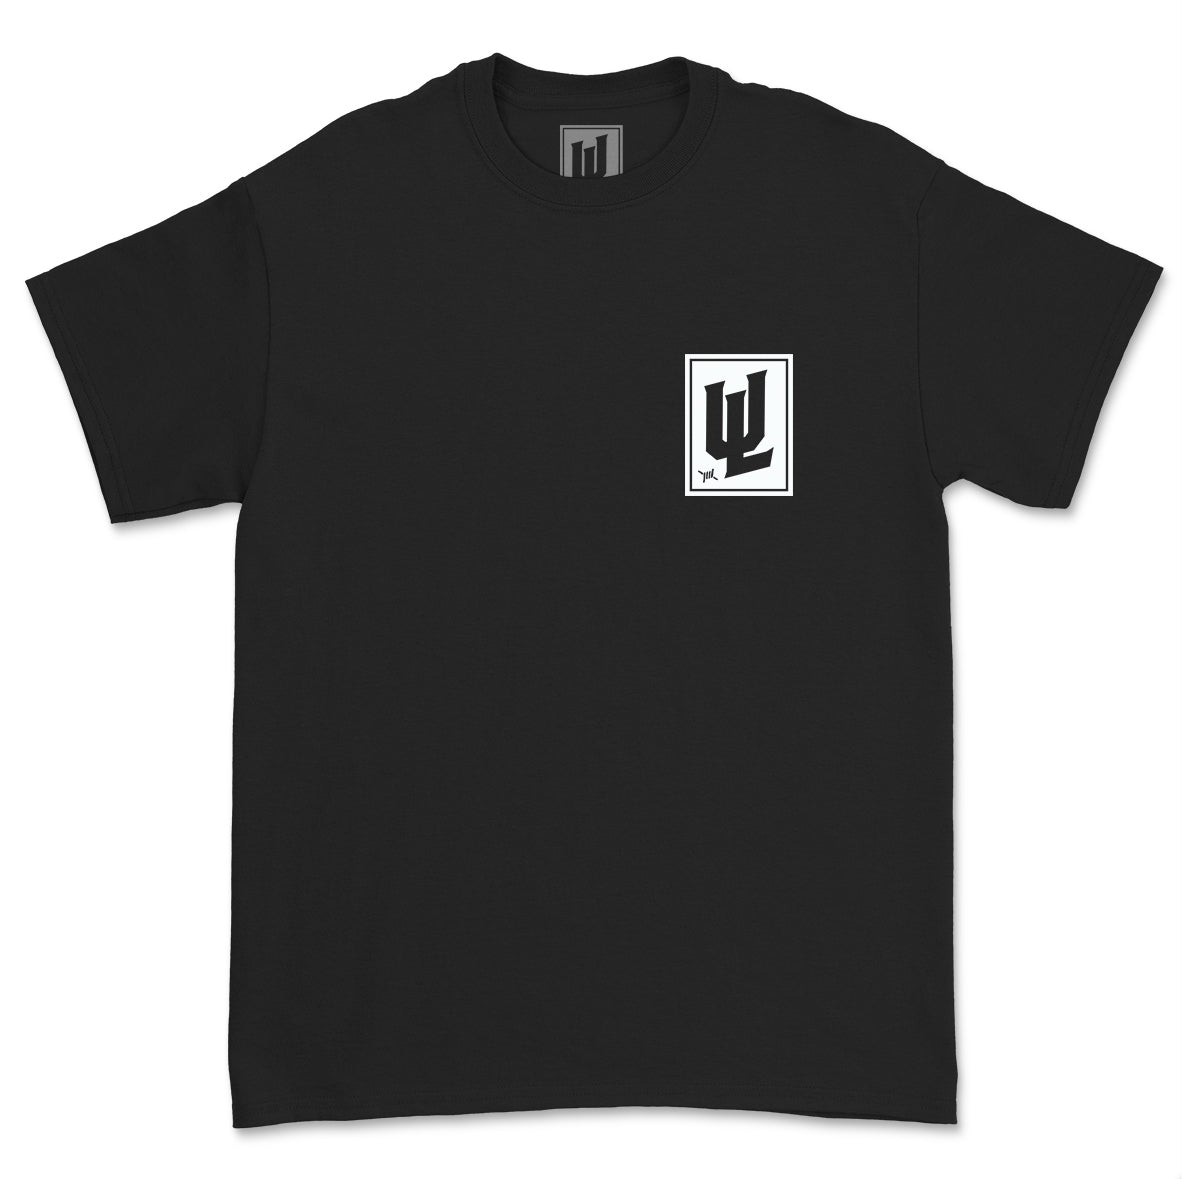 Urbn Lot V1.0 Logo Banner T-Shirt - Black